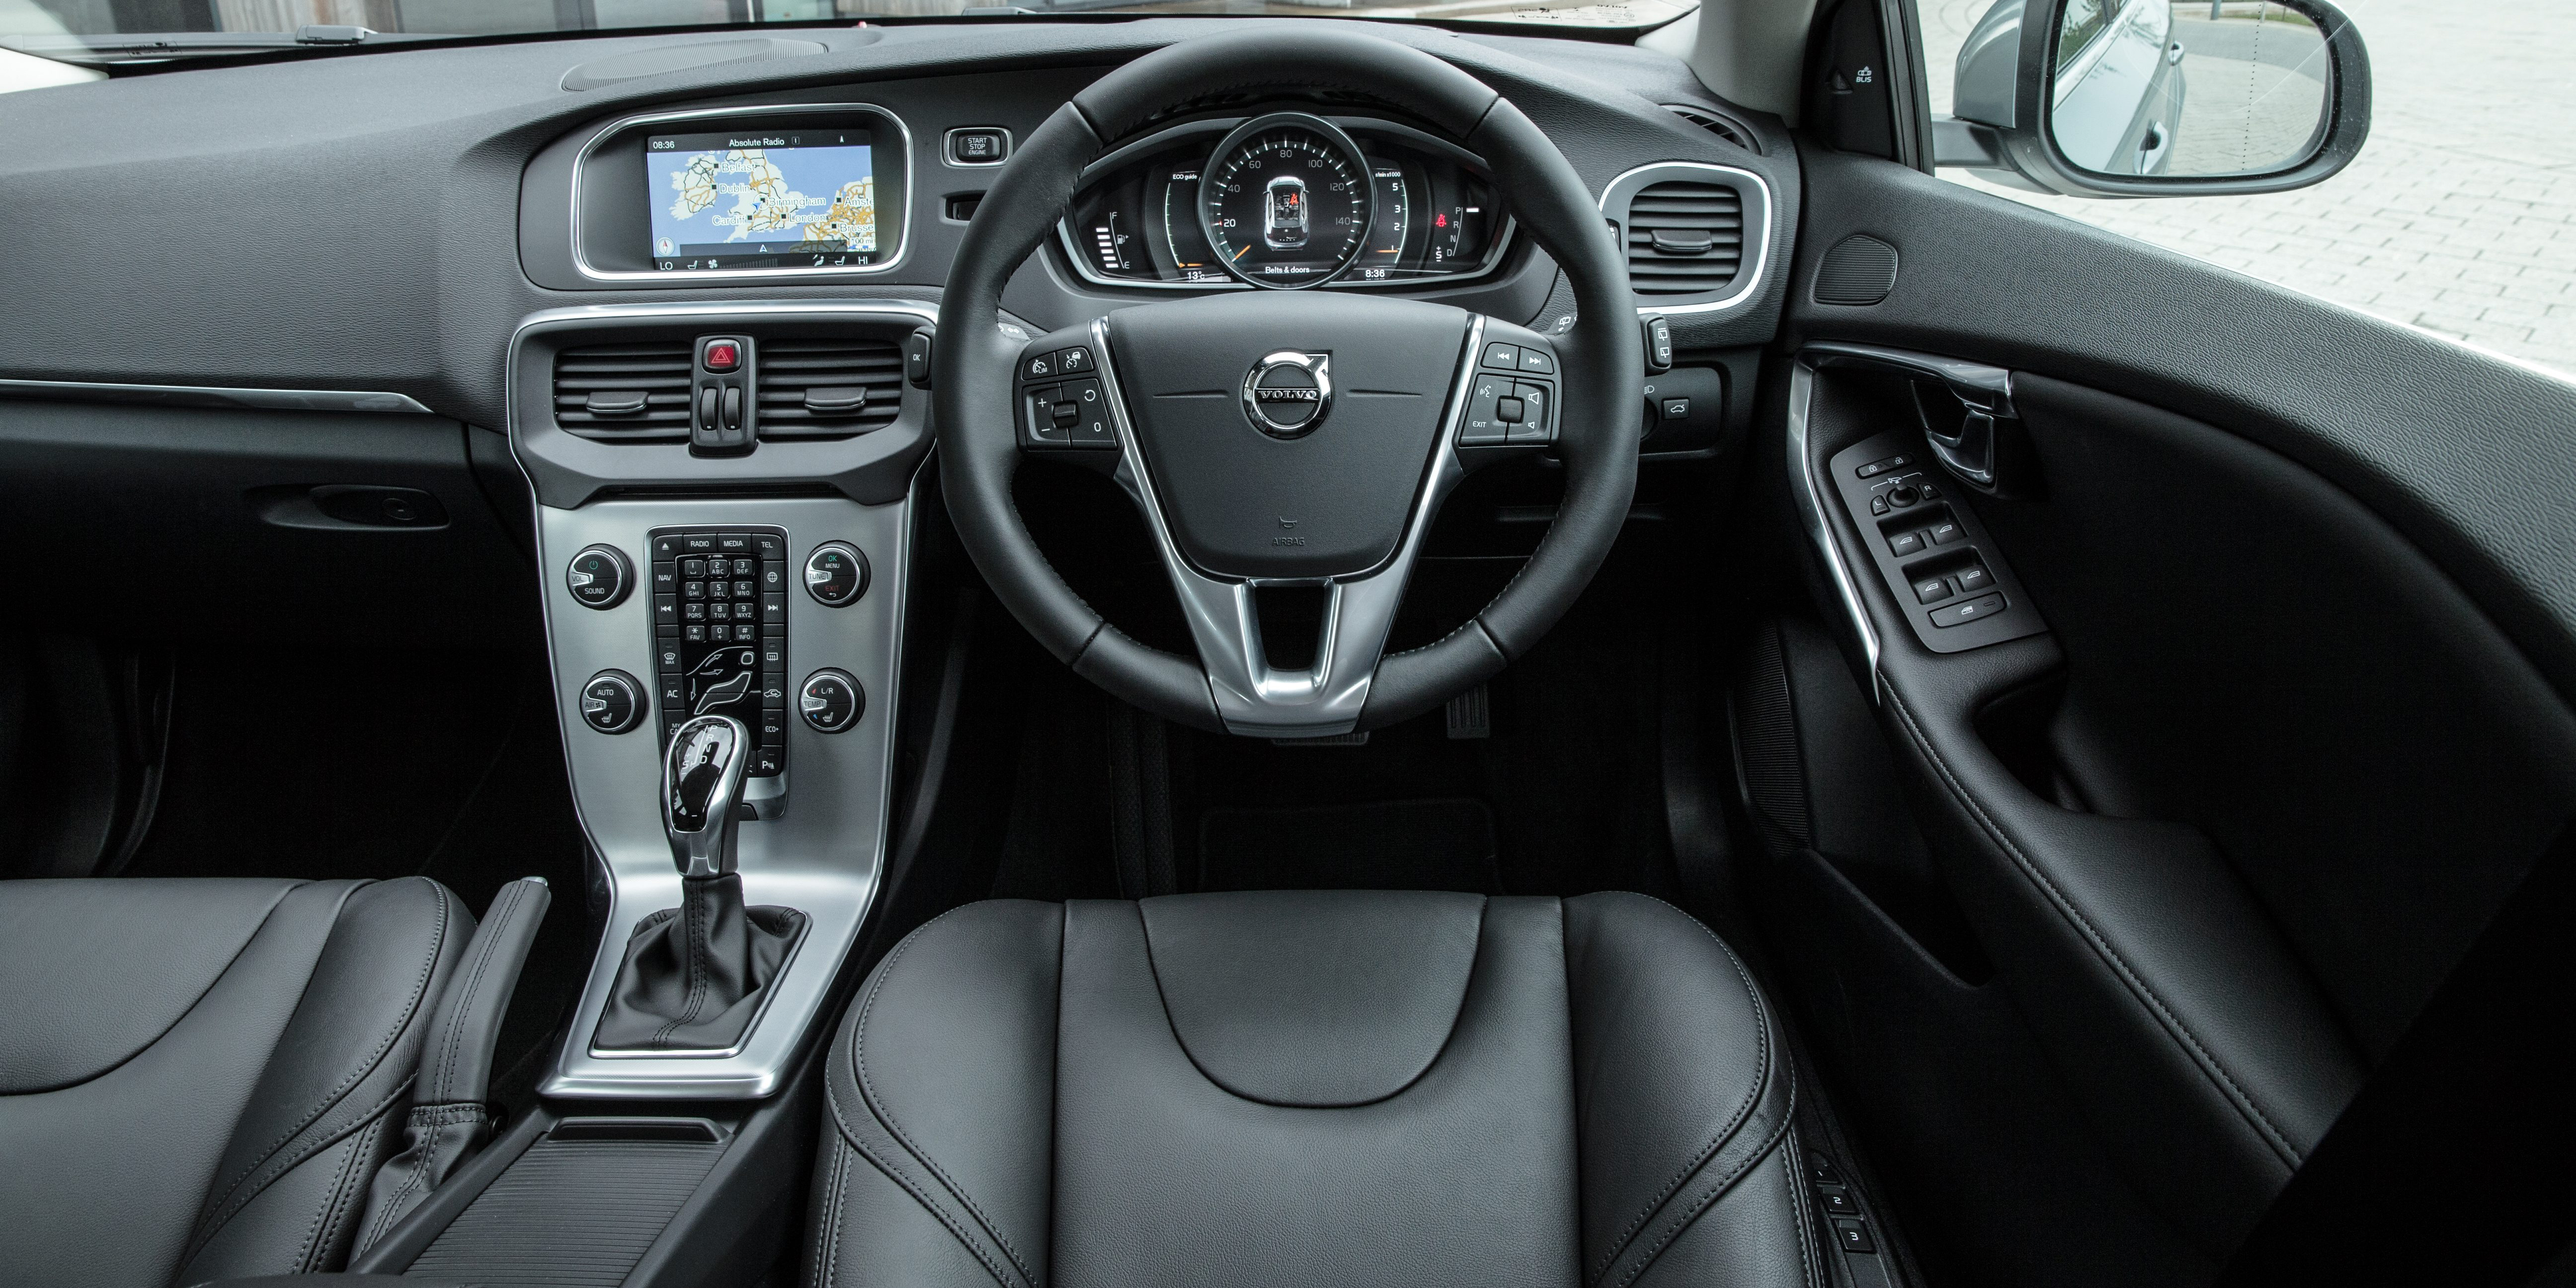 Volvo V40 interior model